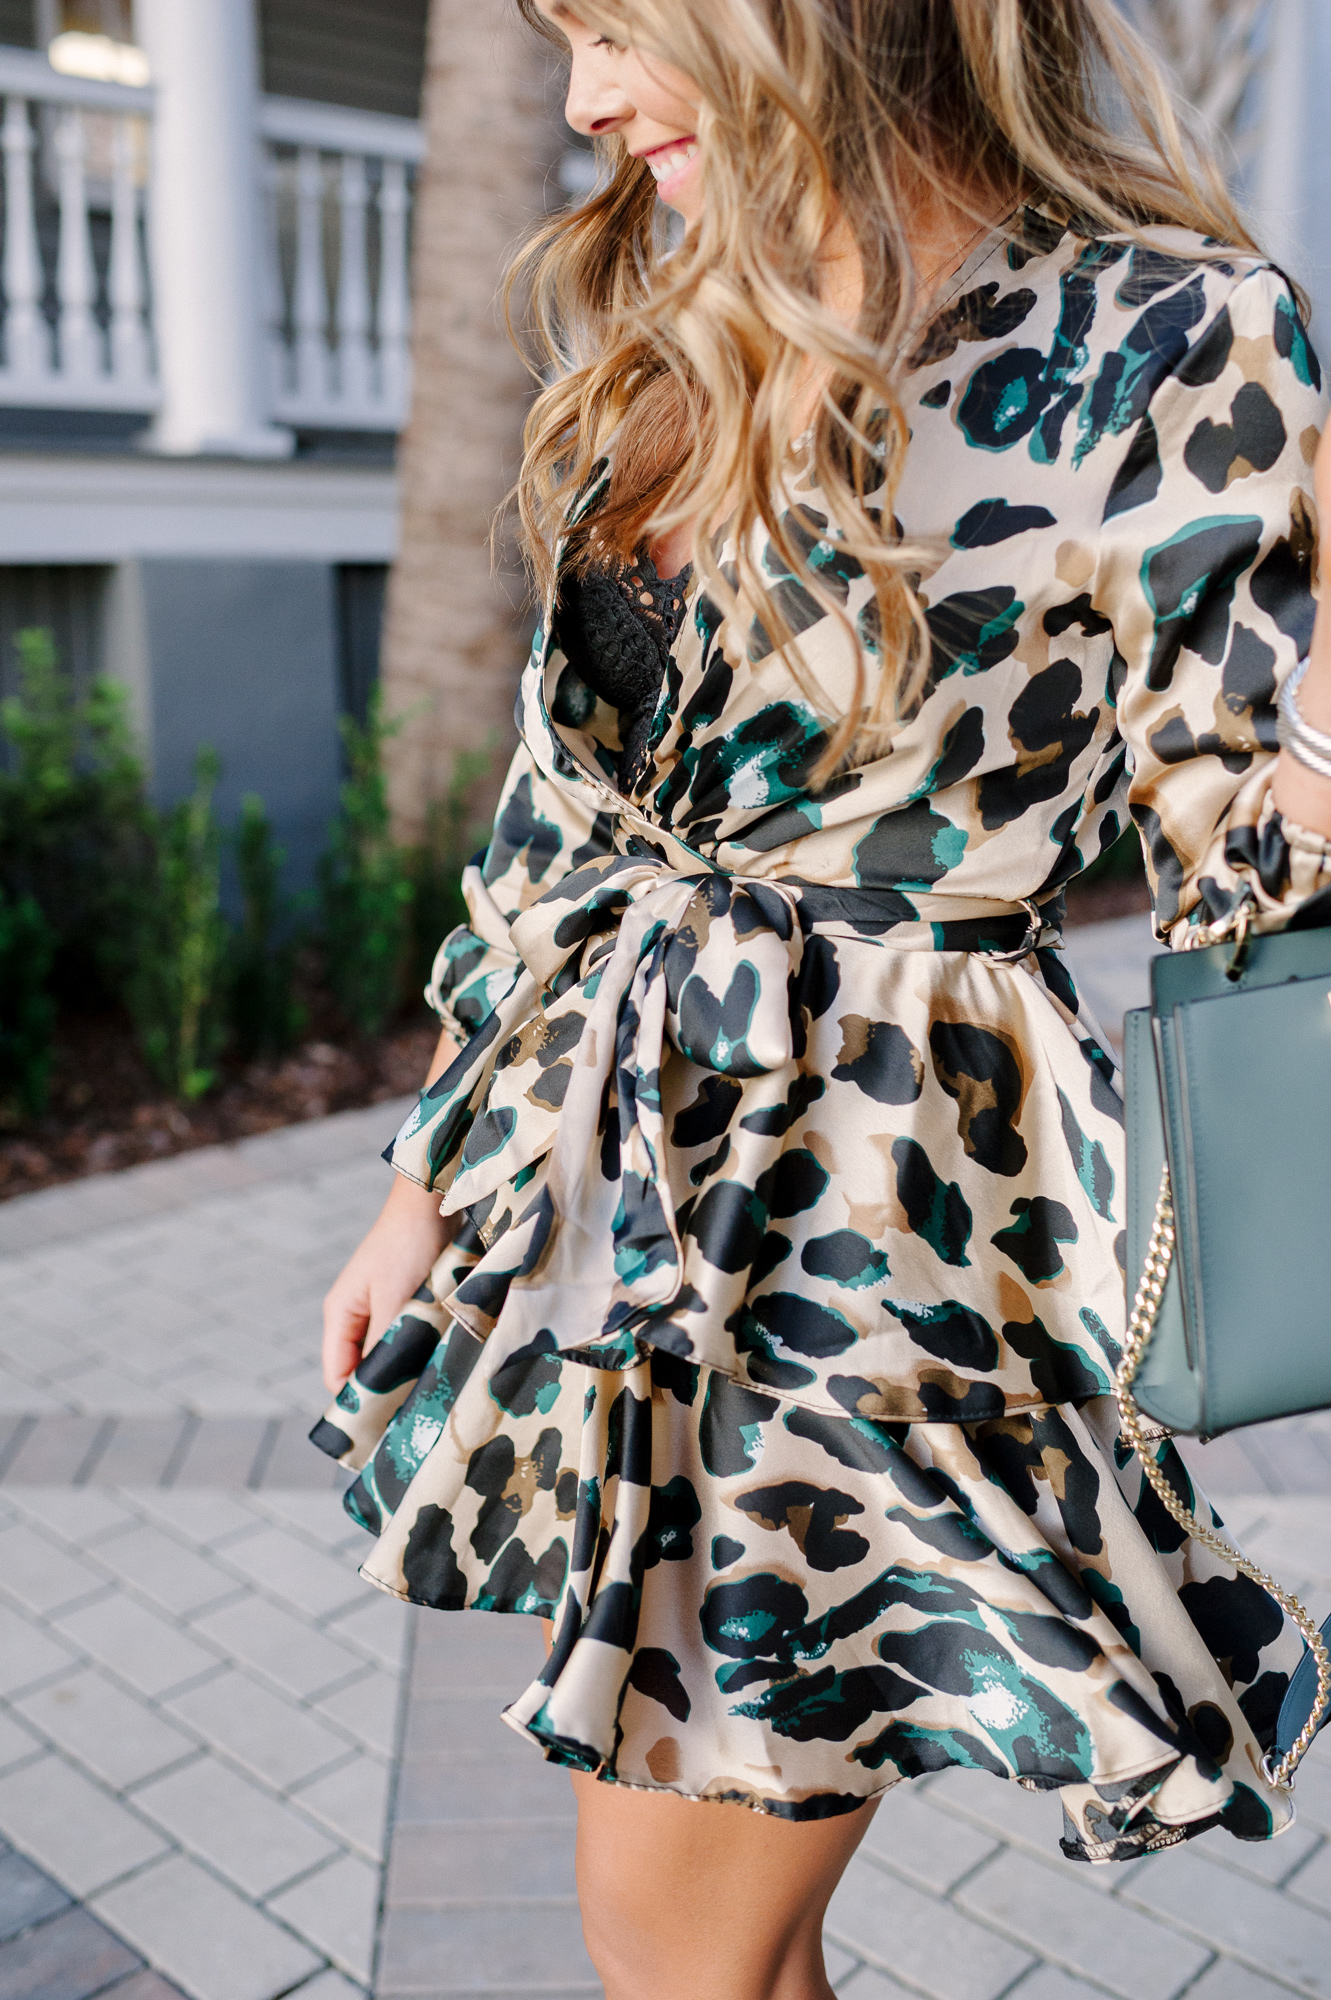 Flirty Leopard Dress / Holiday Outfit Idea